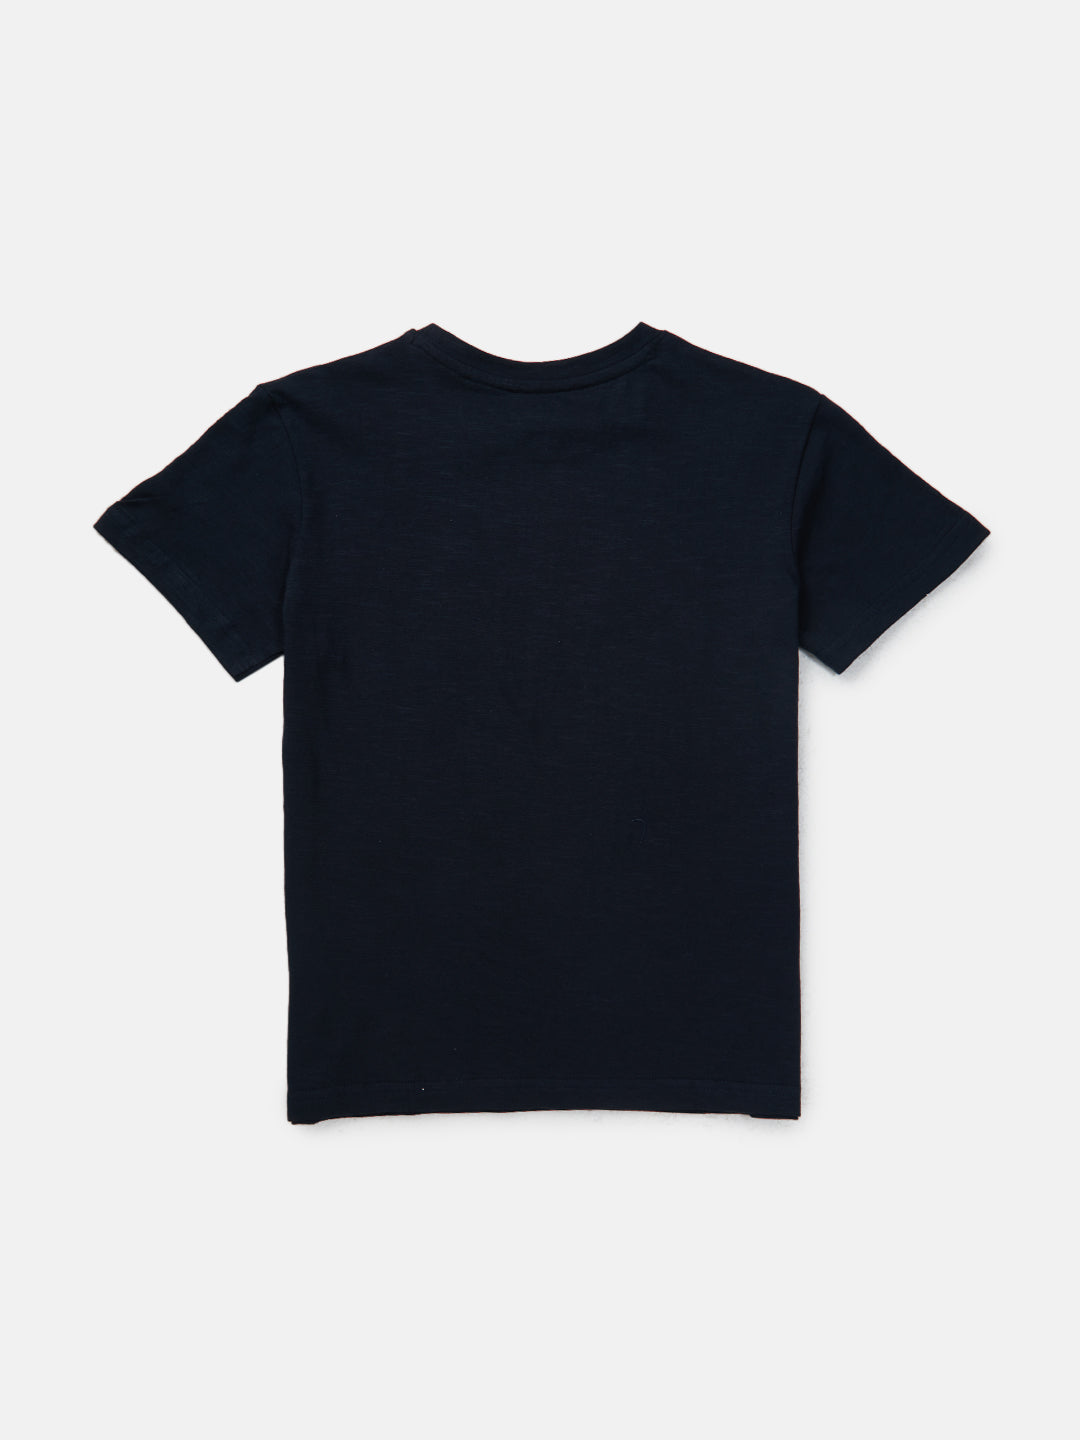 Boys Black Printed Cotton T-Shirt